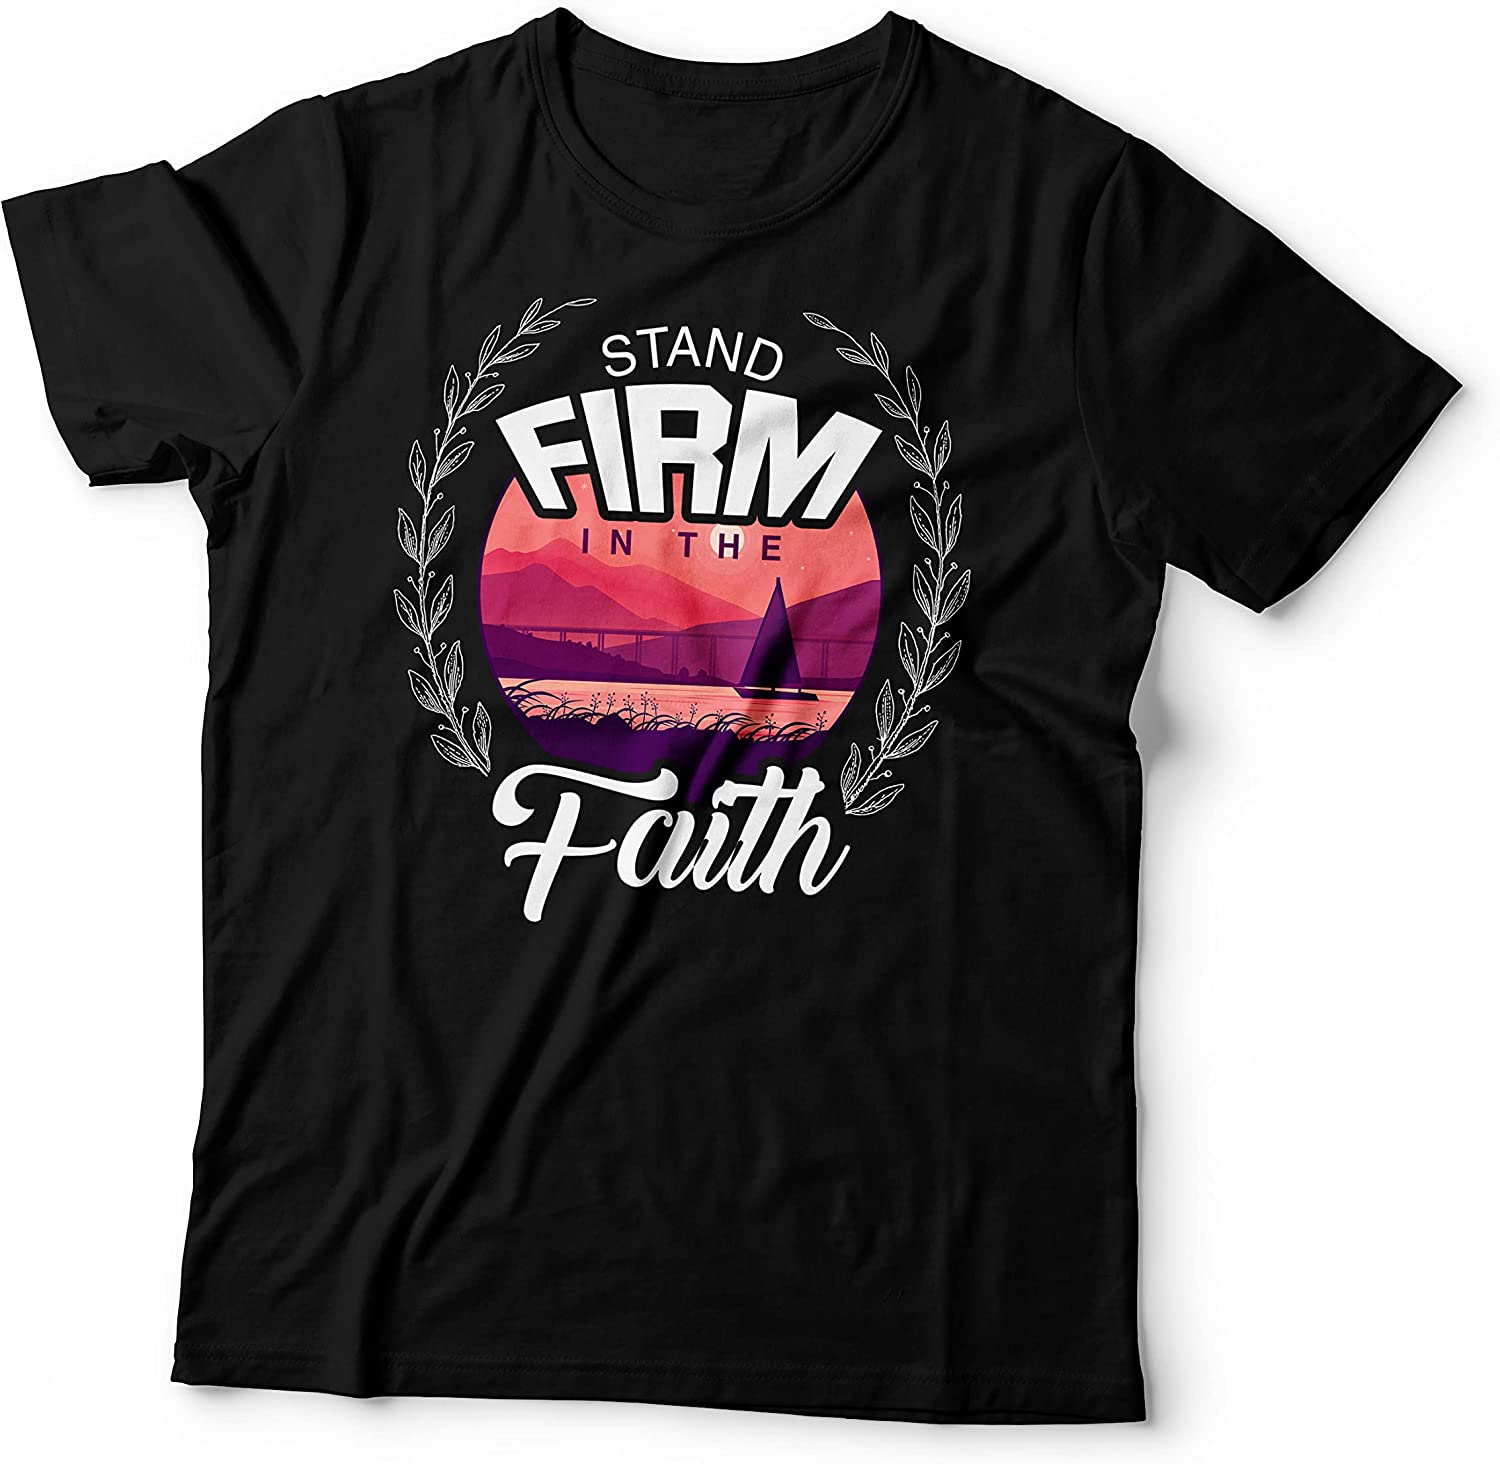 Stand Firm in the Faith T-shirt Black-Medium